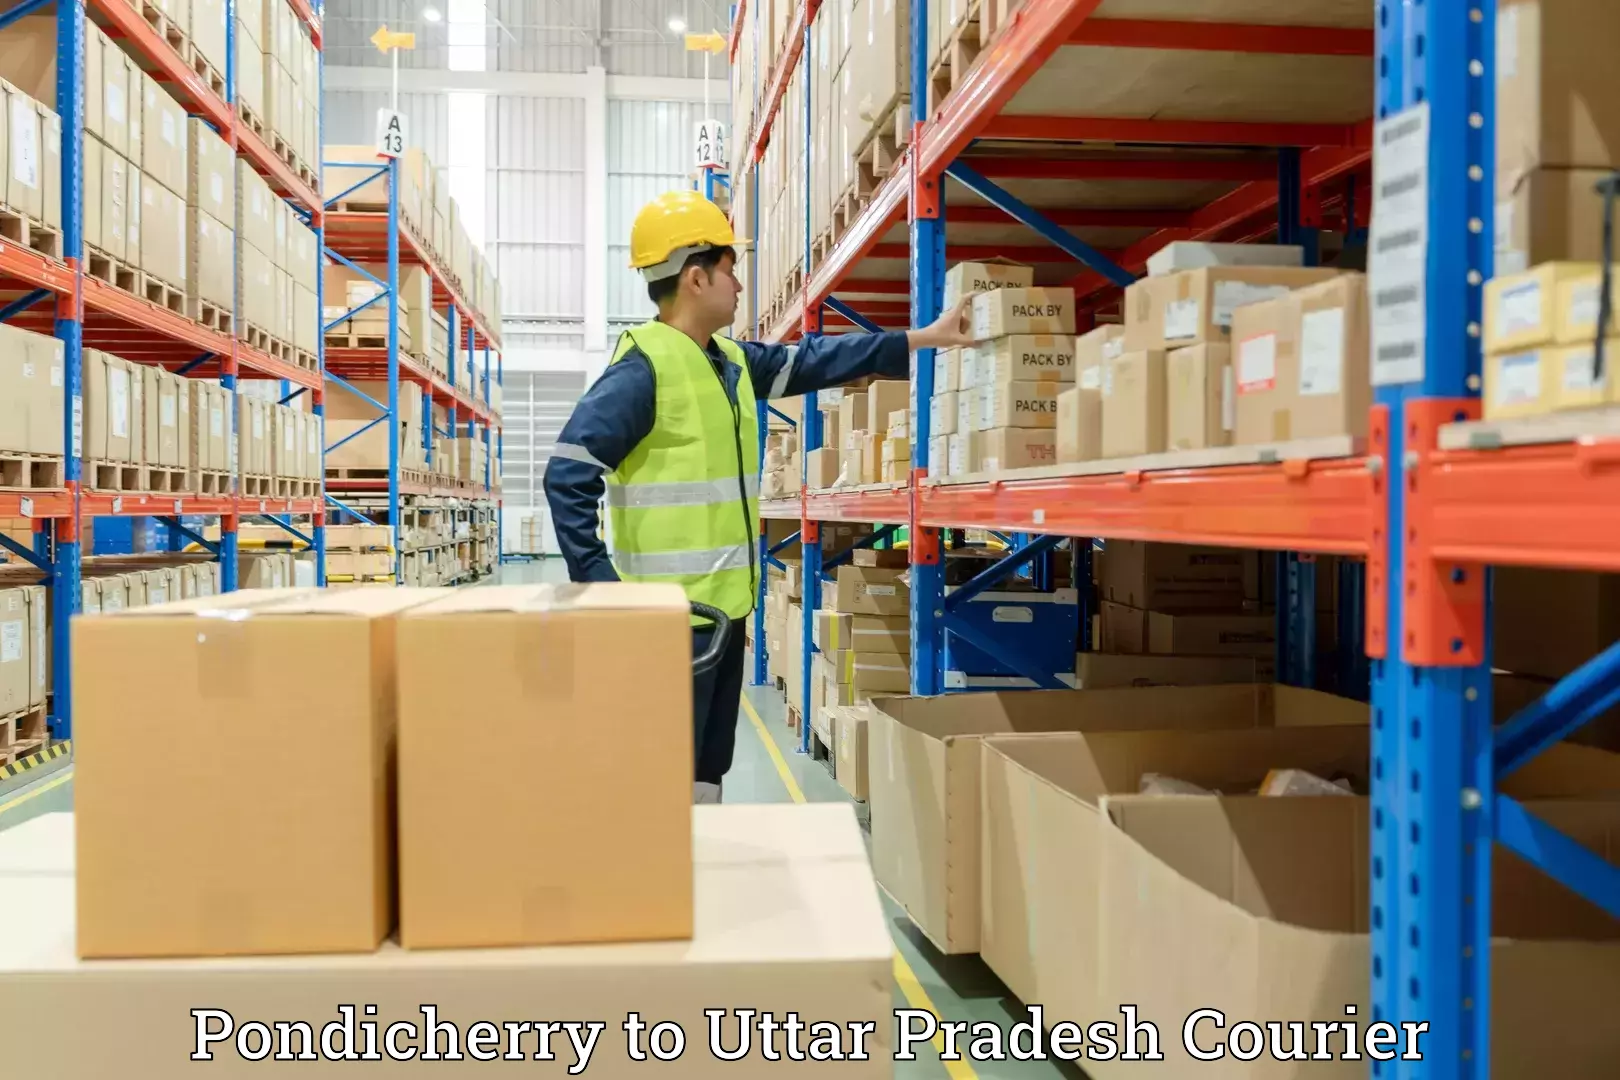 Furniture moving specialists Pondicherry to Uttar Pradesh